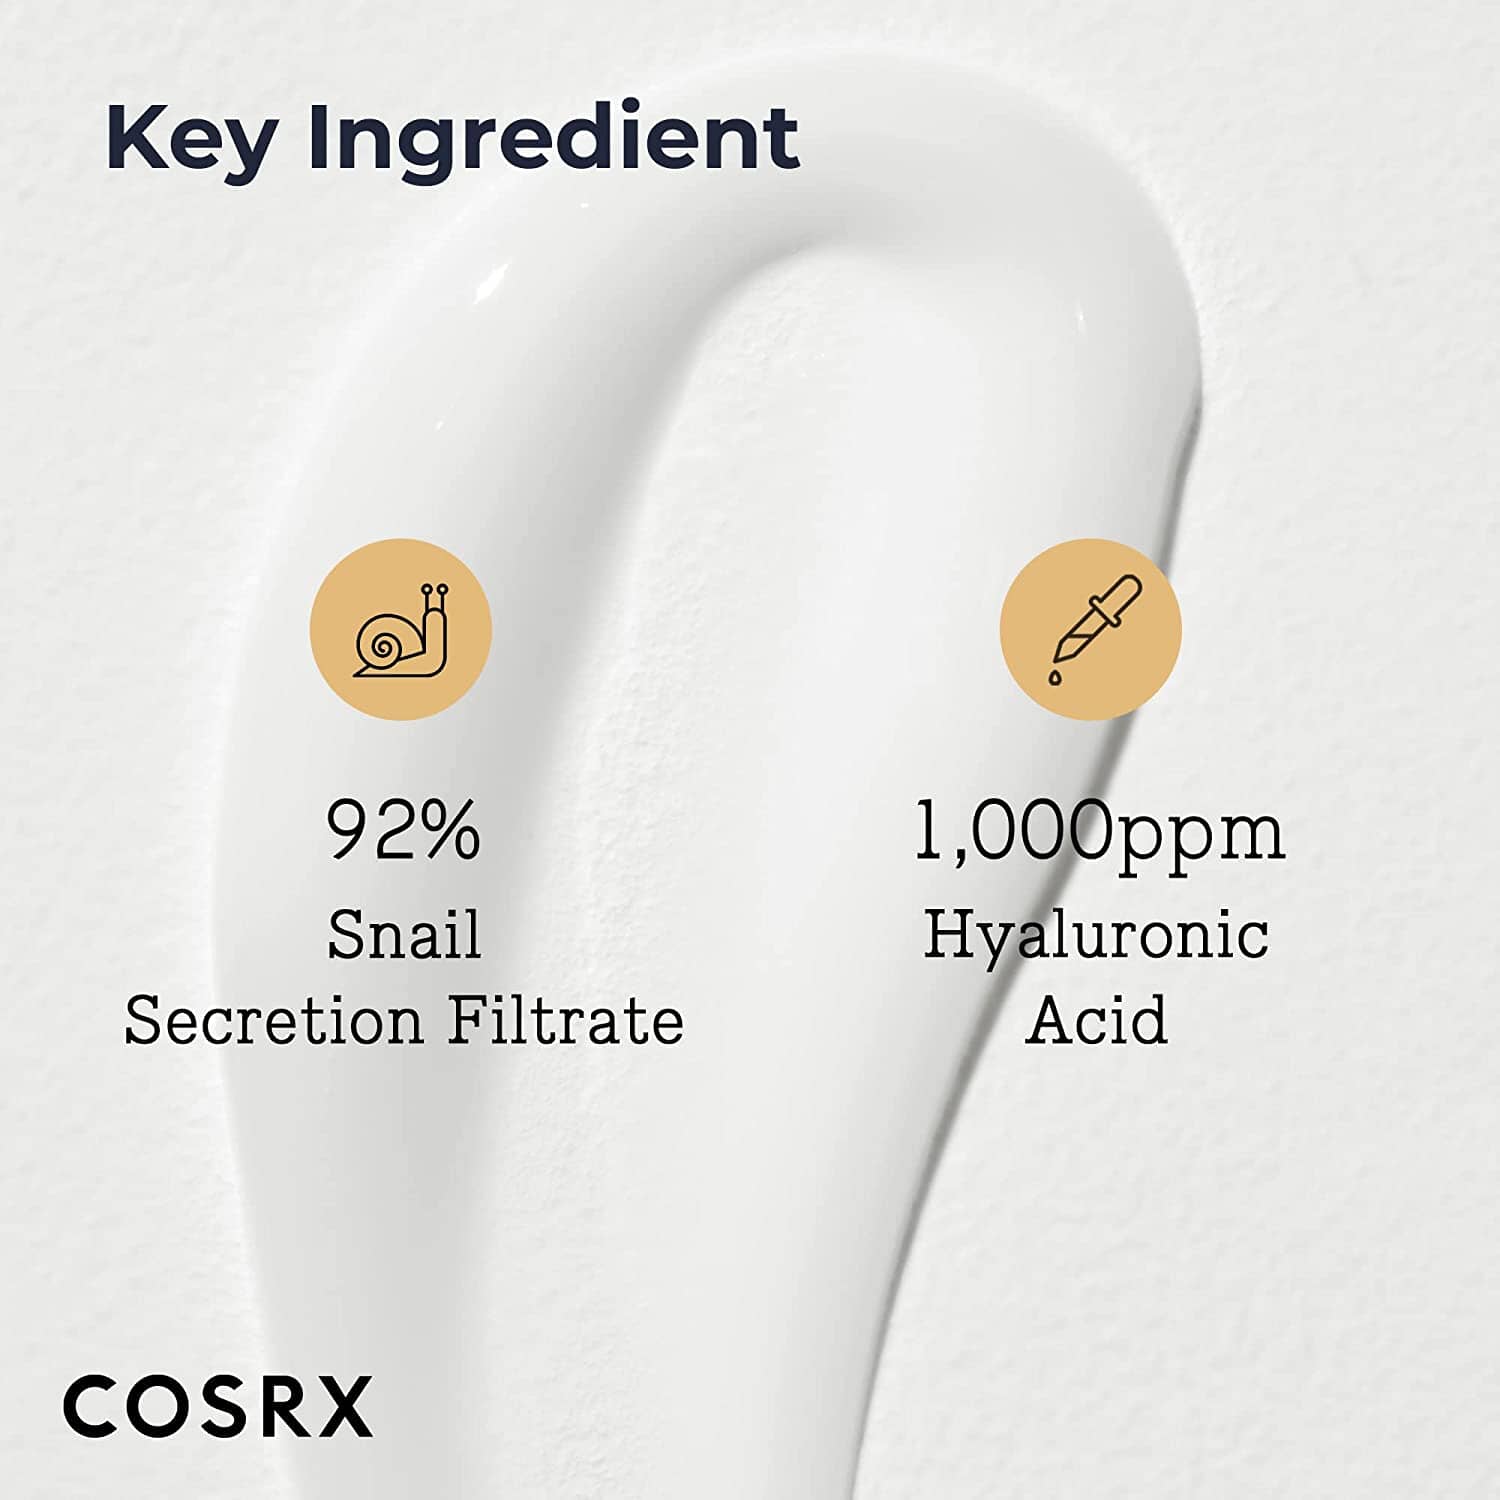 COSRX Advanced Snail 92 All in one Cream 100ml ( x2 ) Duo Pack Skin Care COSRX ORION XO Sri Lanka